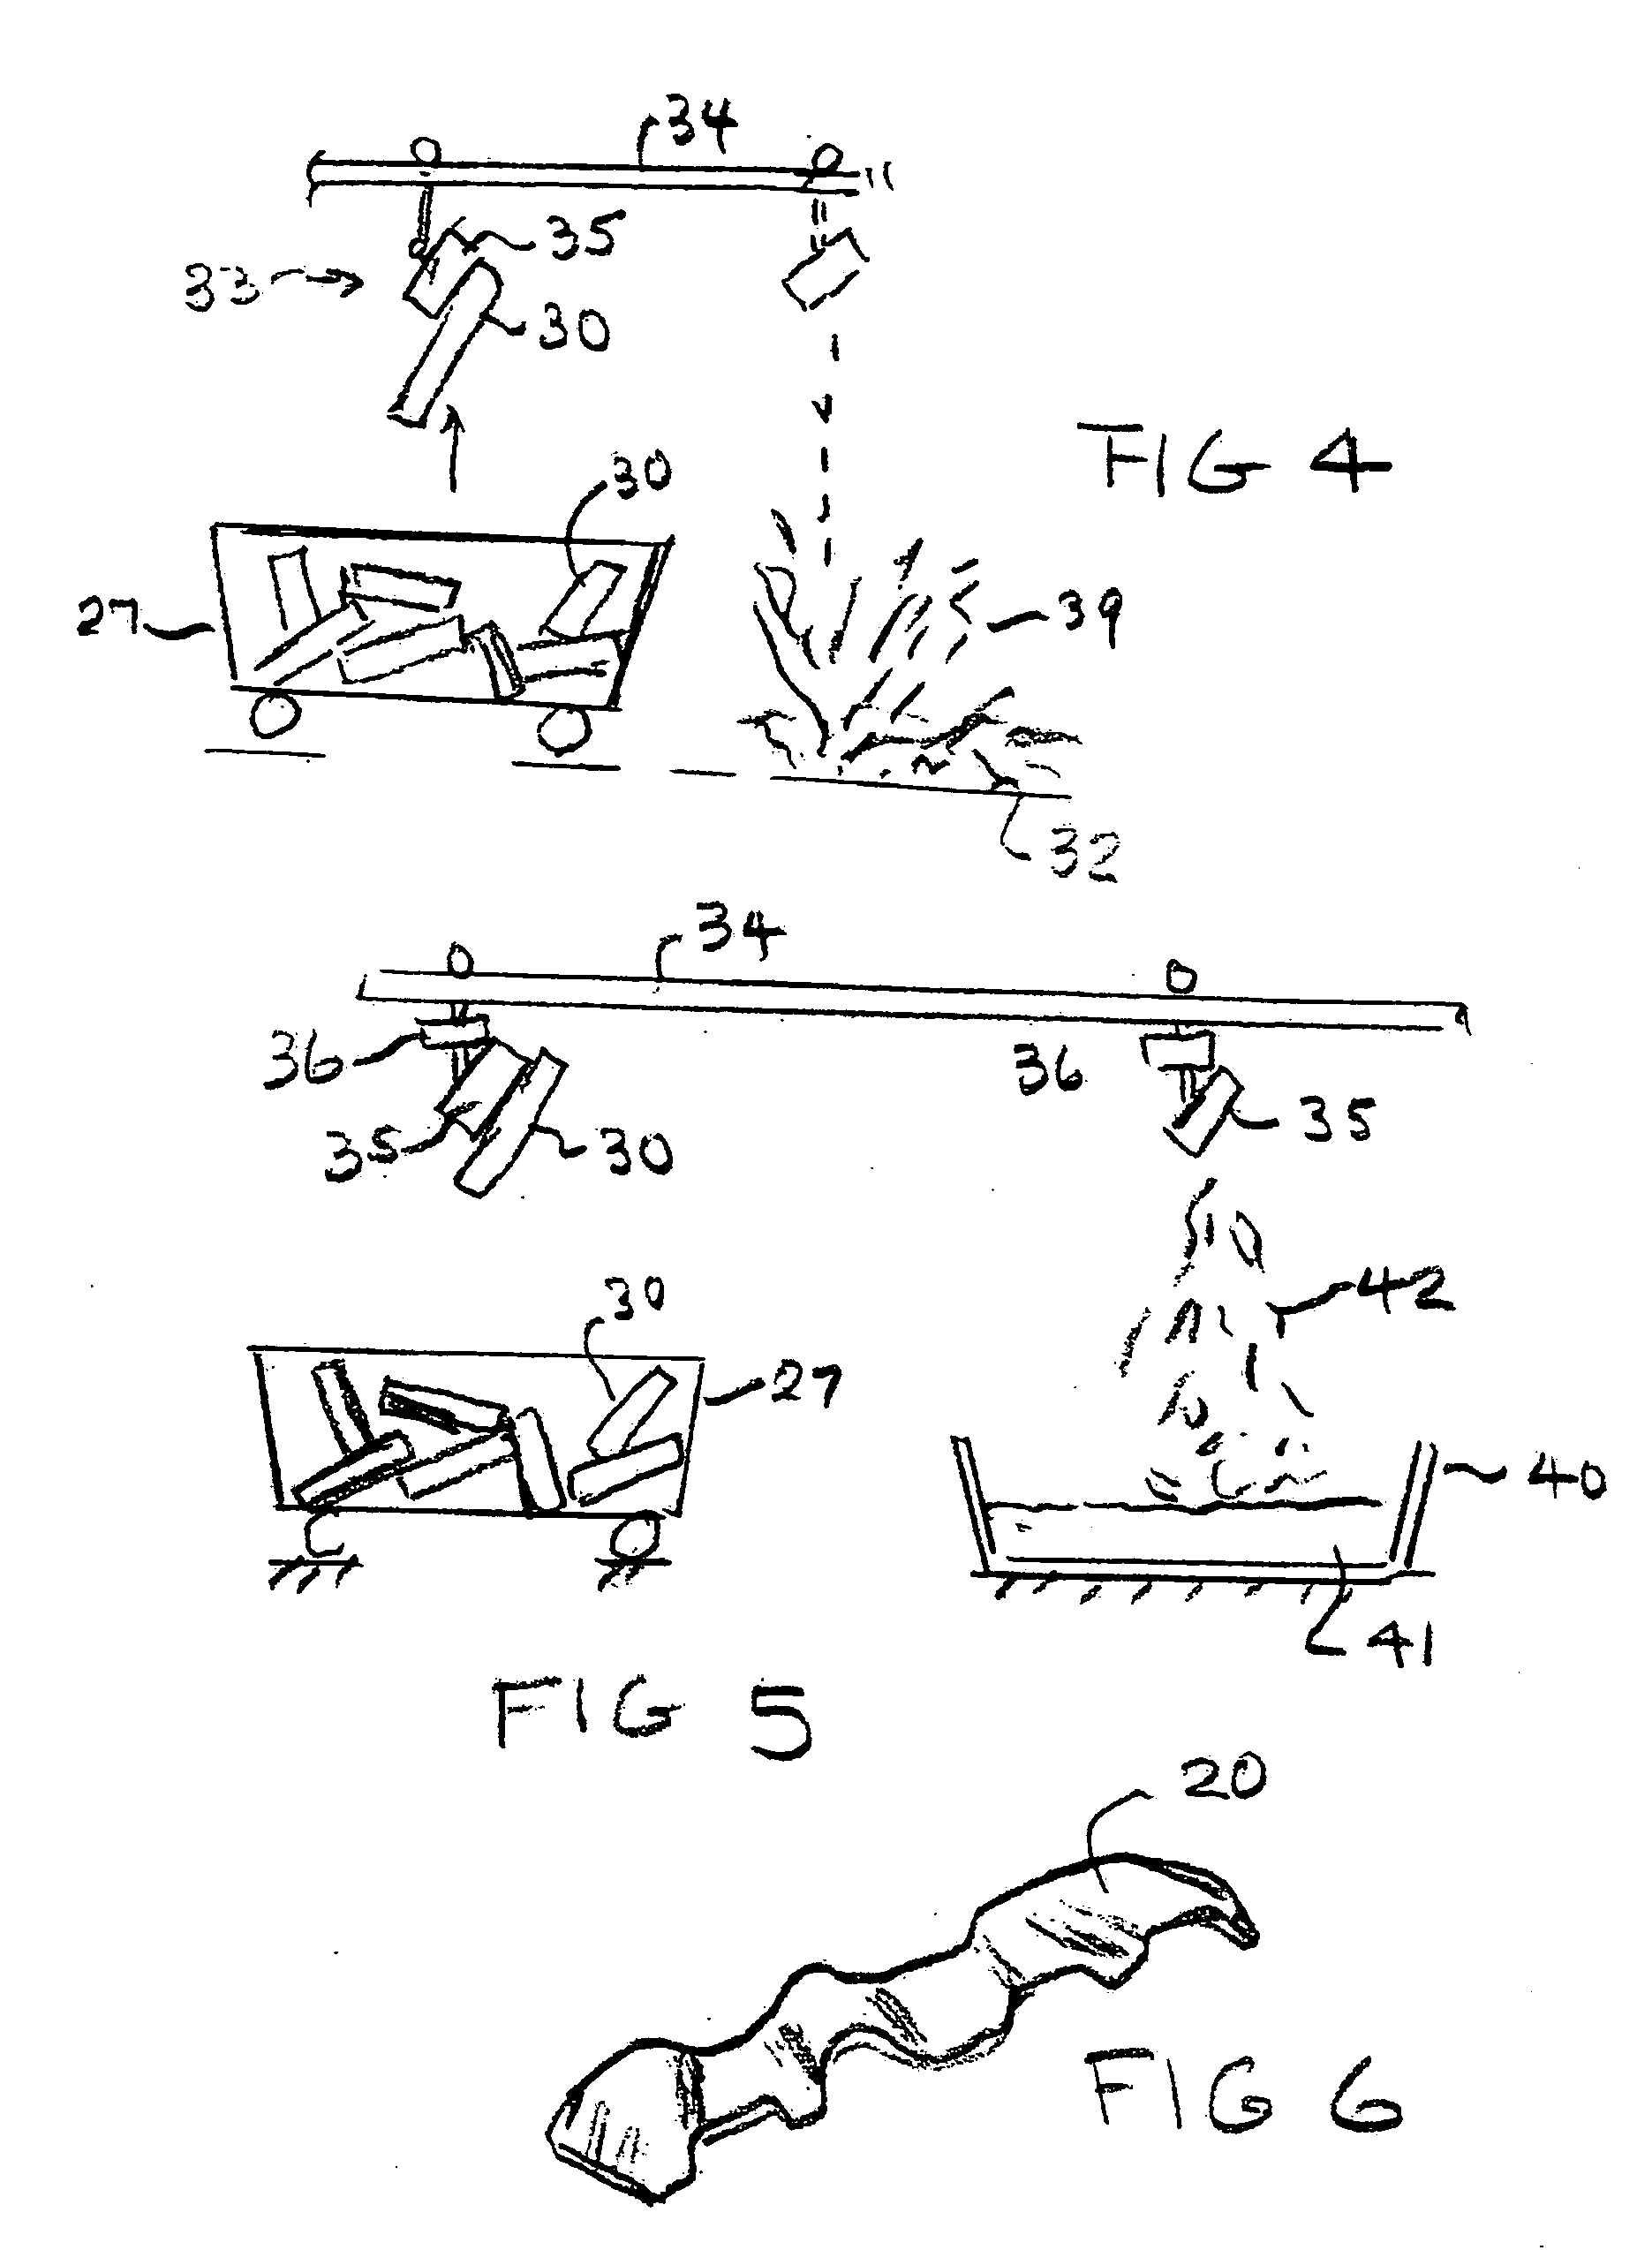 Method for transporting bent, irregularly shaped pieces of scrap sheet metal